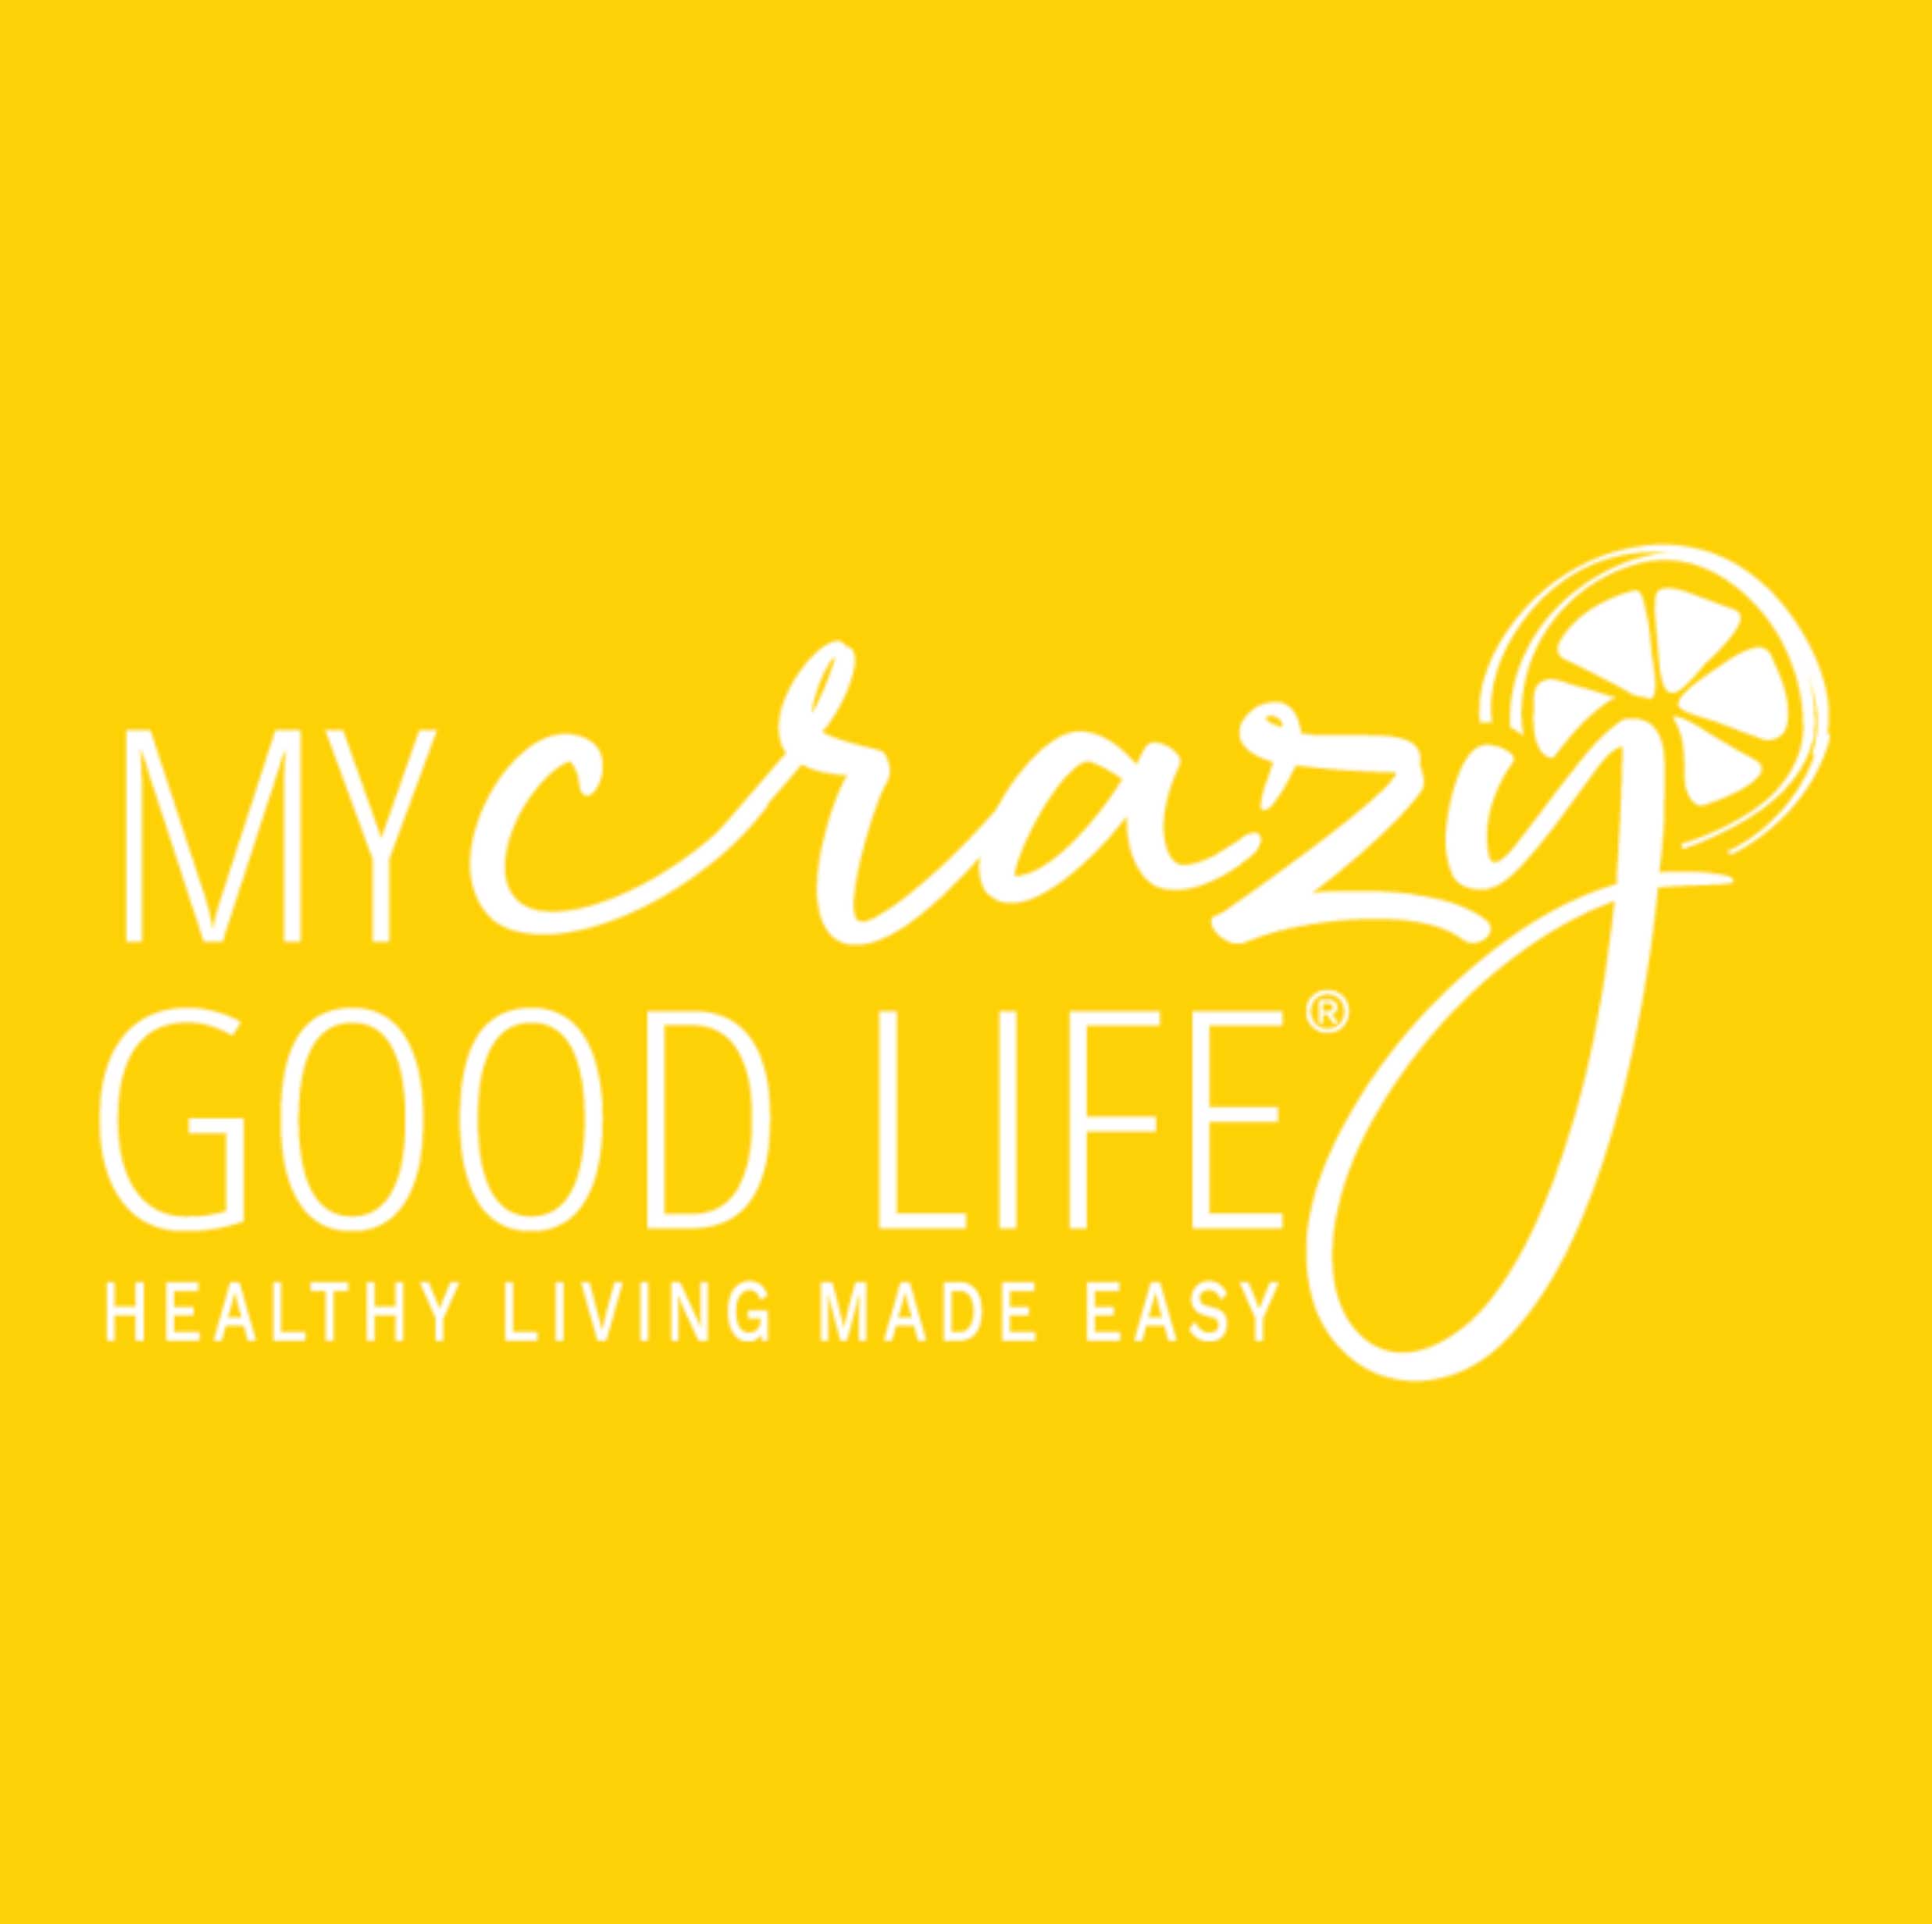 https://mycrazygoodlife.com/wp-content/uploads/2020/08/mycrazygoodlife-logo.jpg